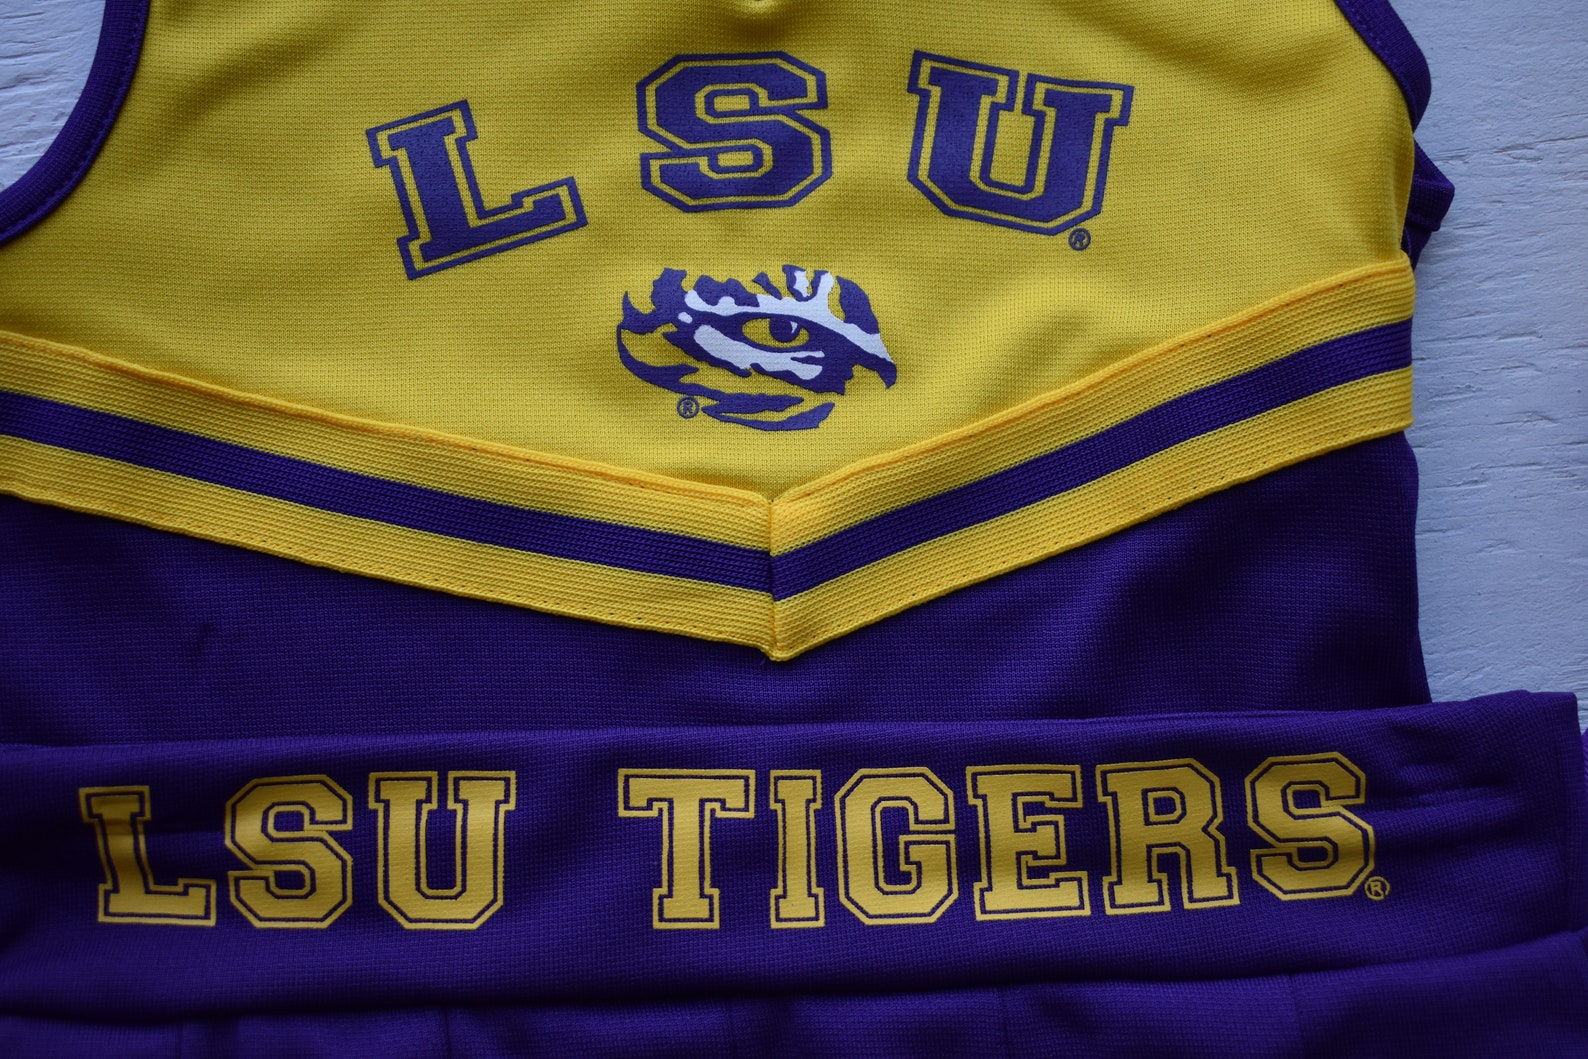 GIRLS 4 5 Cheerleader Outfit Uniform Lsu Tigers Louisiana Pom | Etsy